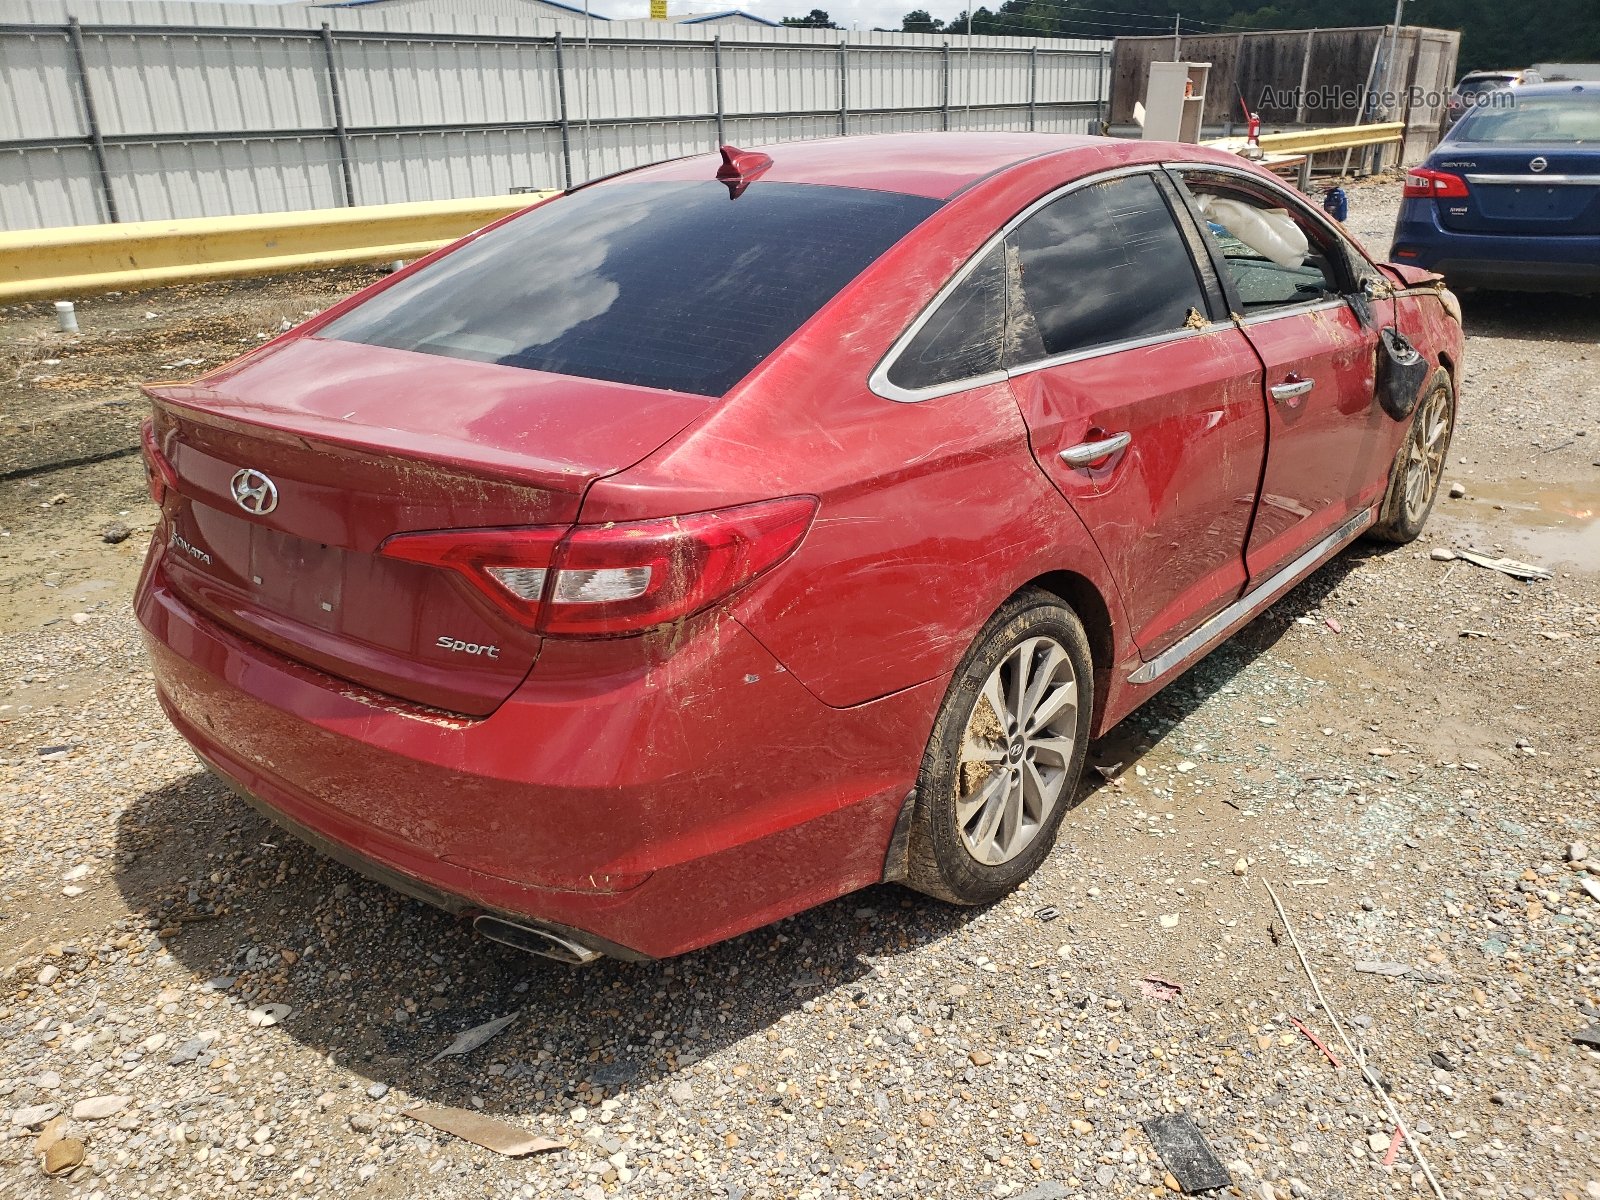 2017 Hyundai Sonata Sport Red vin: 5NPE34AF1HH587377